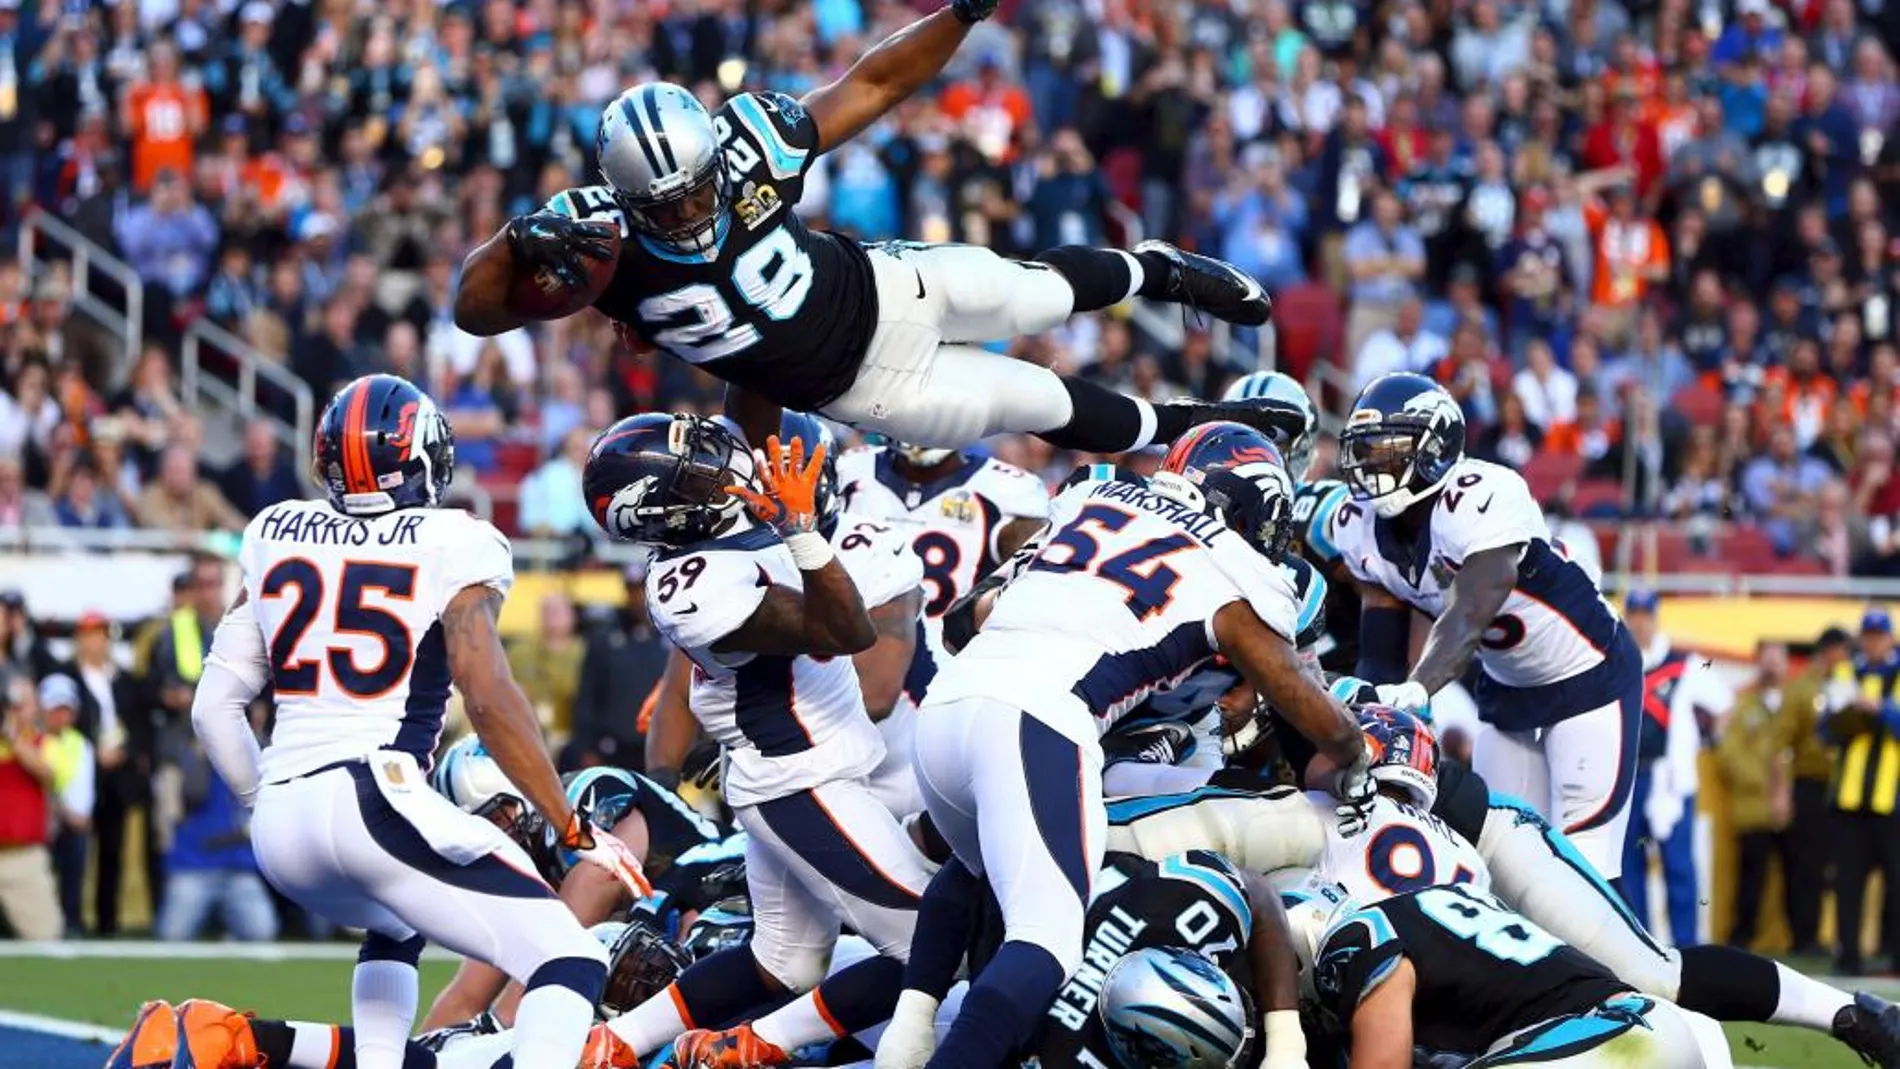 Jonathan Stewart de los Carolina Panthers salta sobre la pila de los defensores para un touchdown